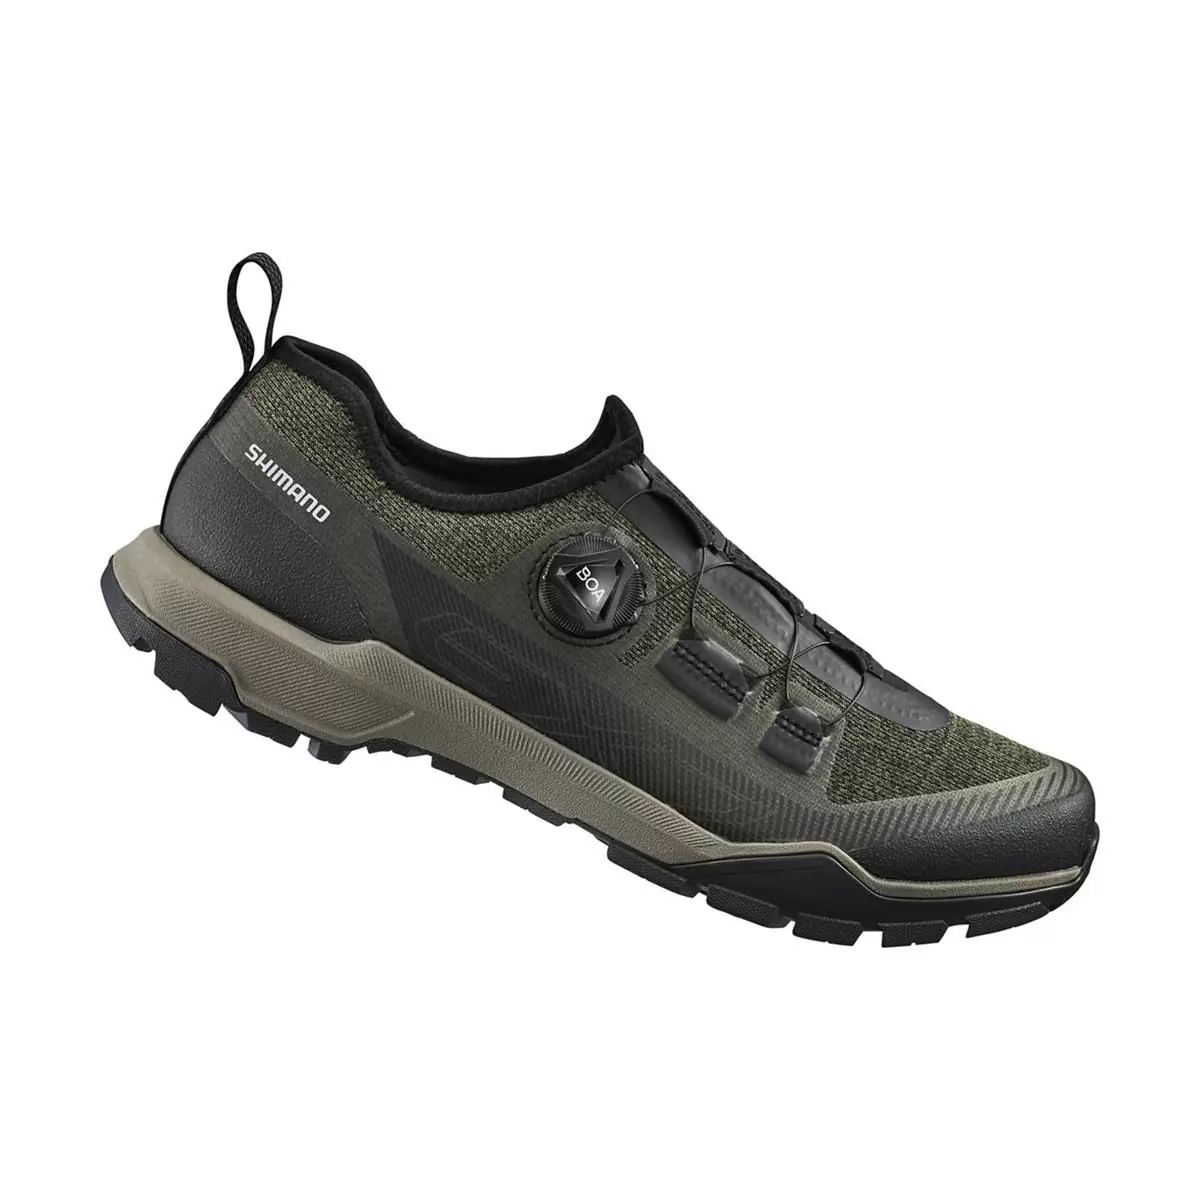 Trekking / MTB Shoes SH-EX700 Green Size 45 - image